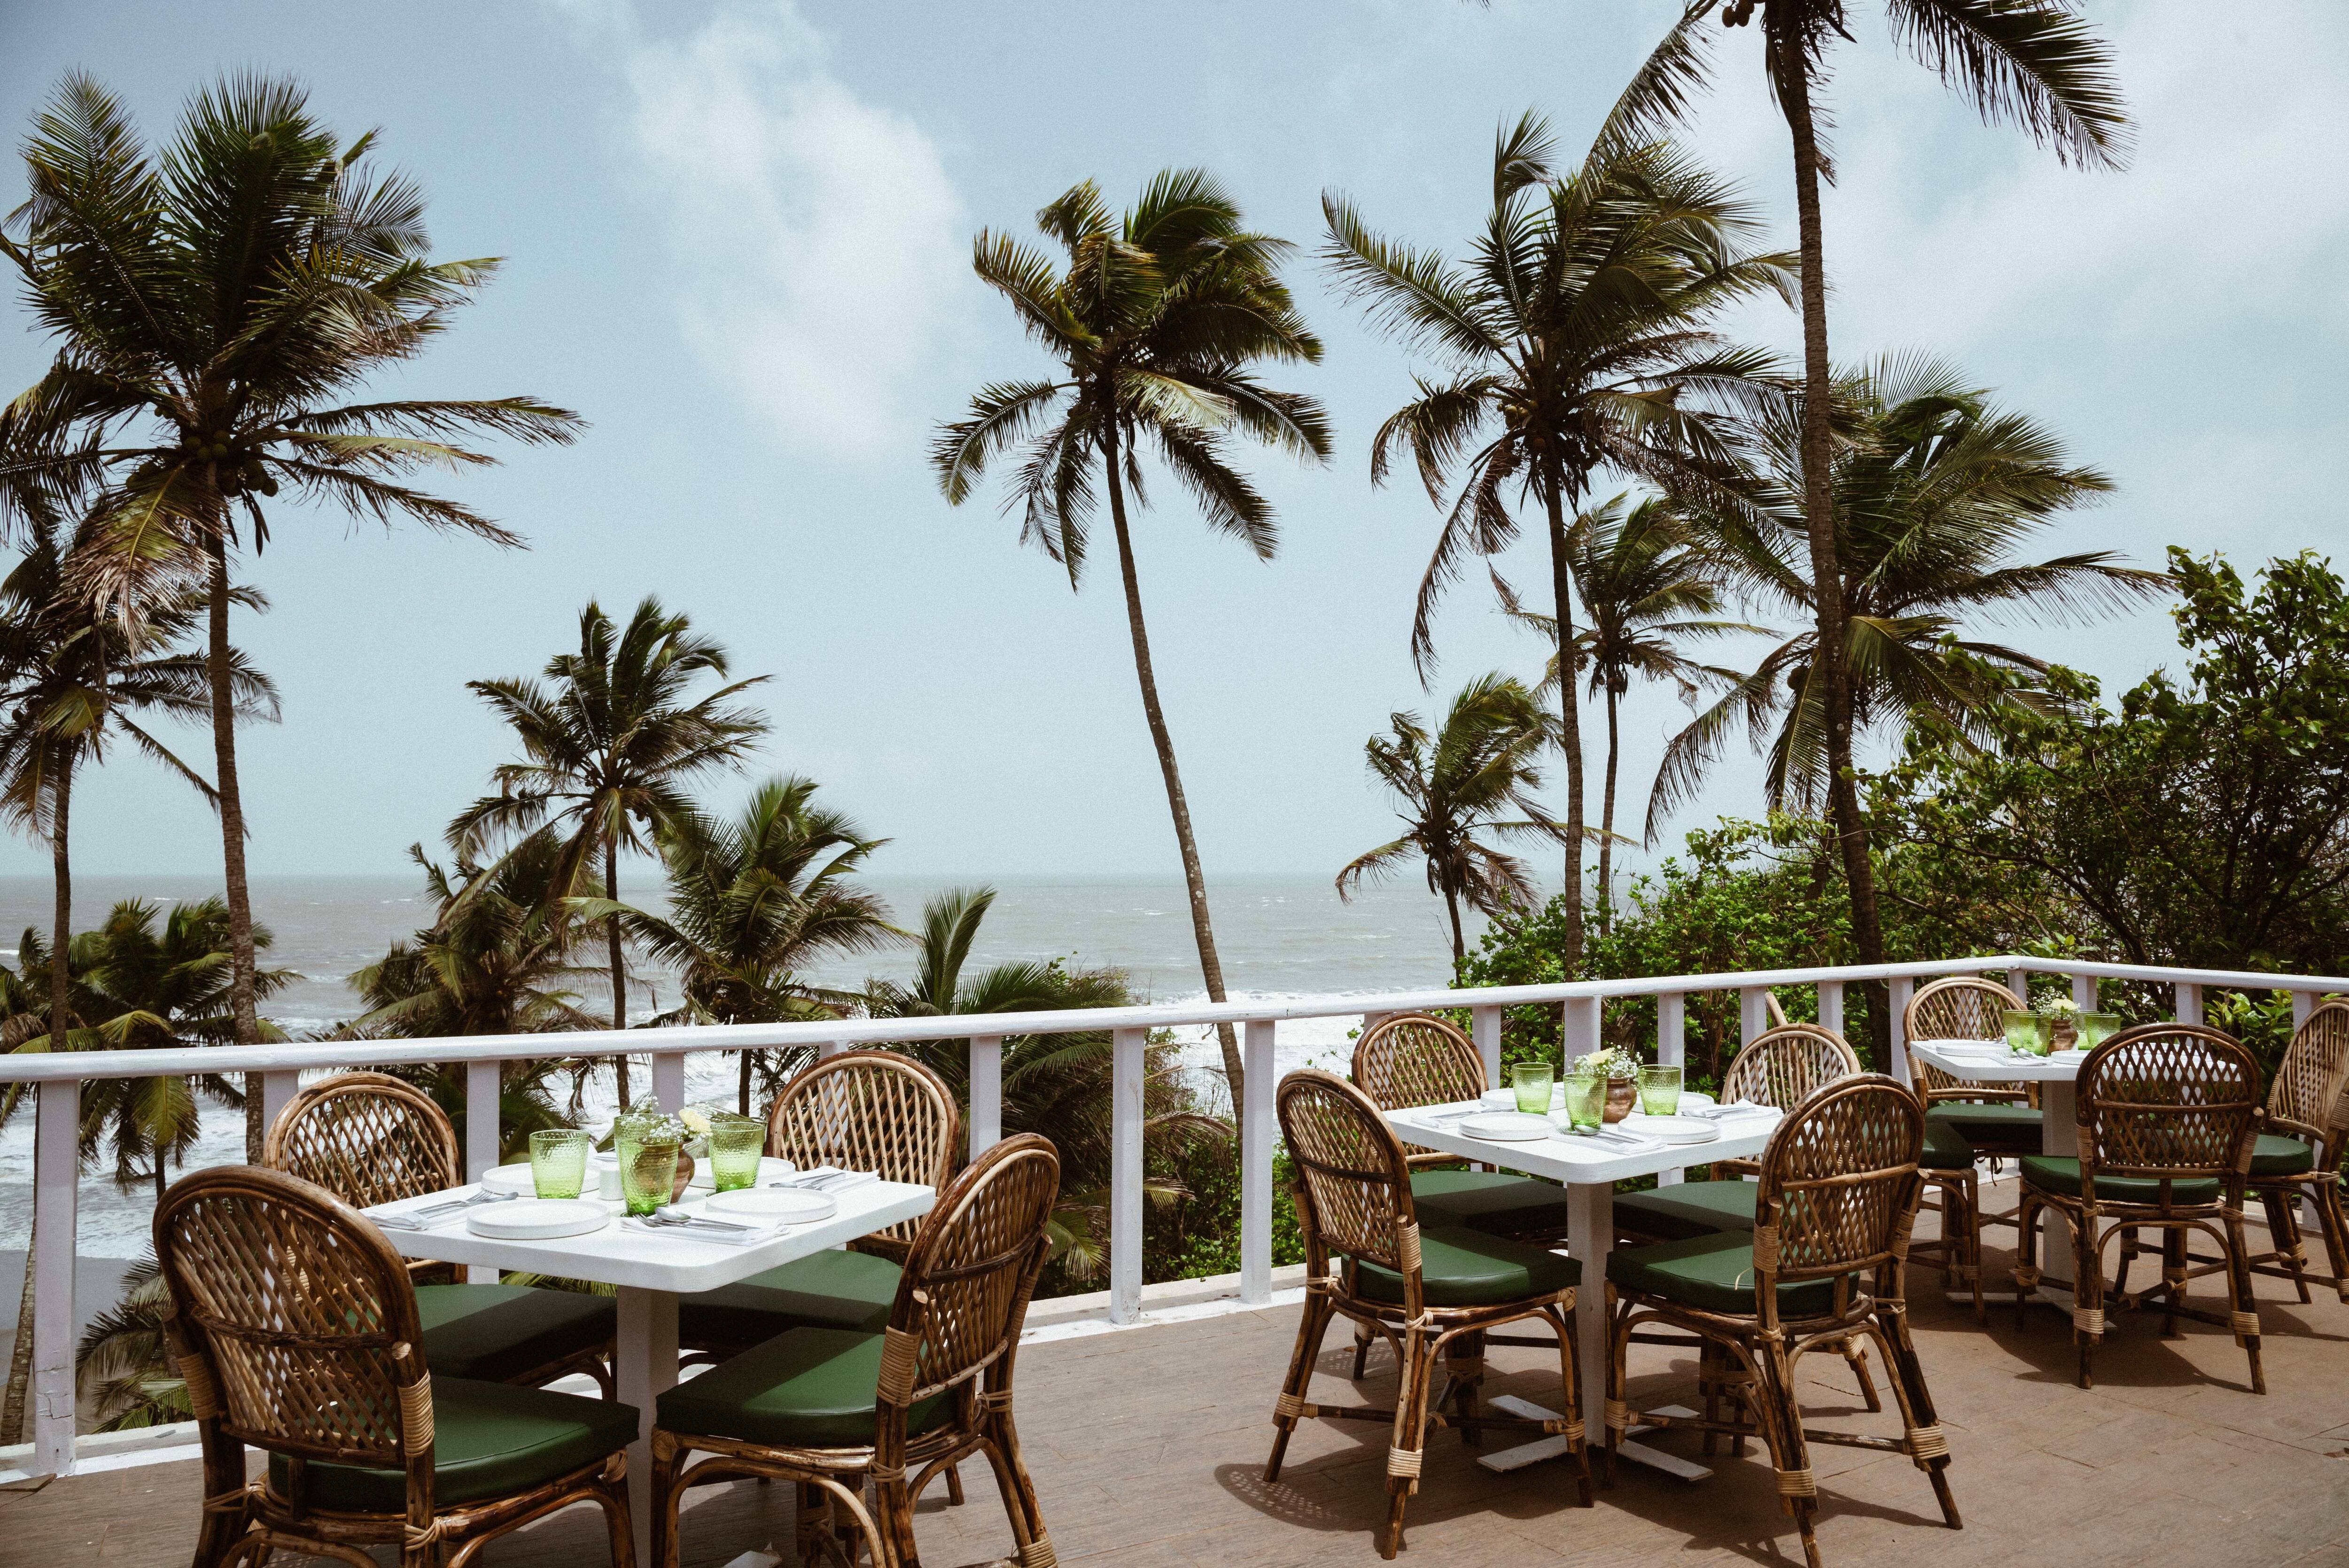 Antares Restaurant & Beach Club, Vagator, Goa | Zomato